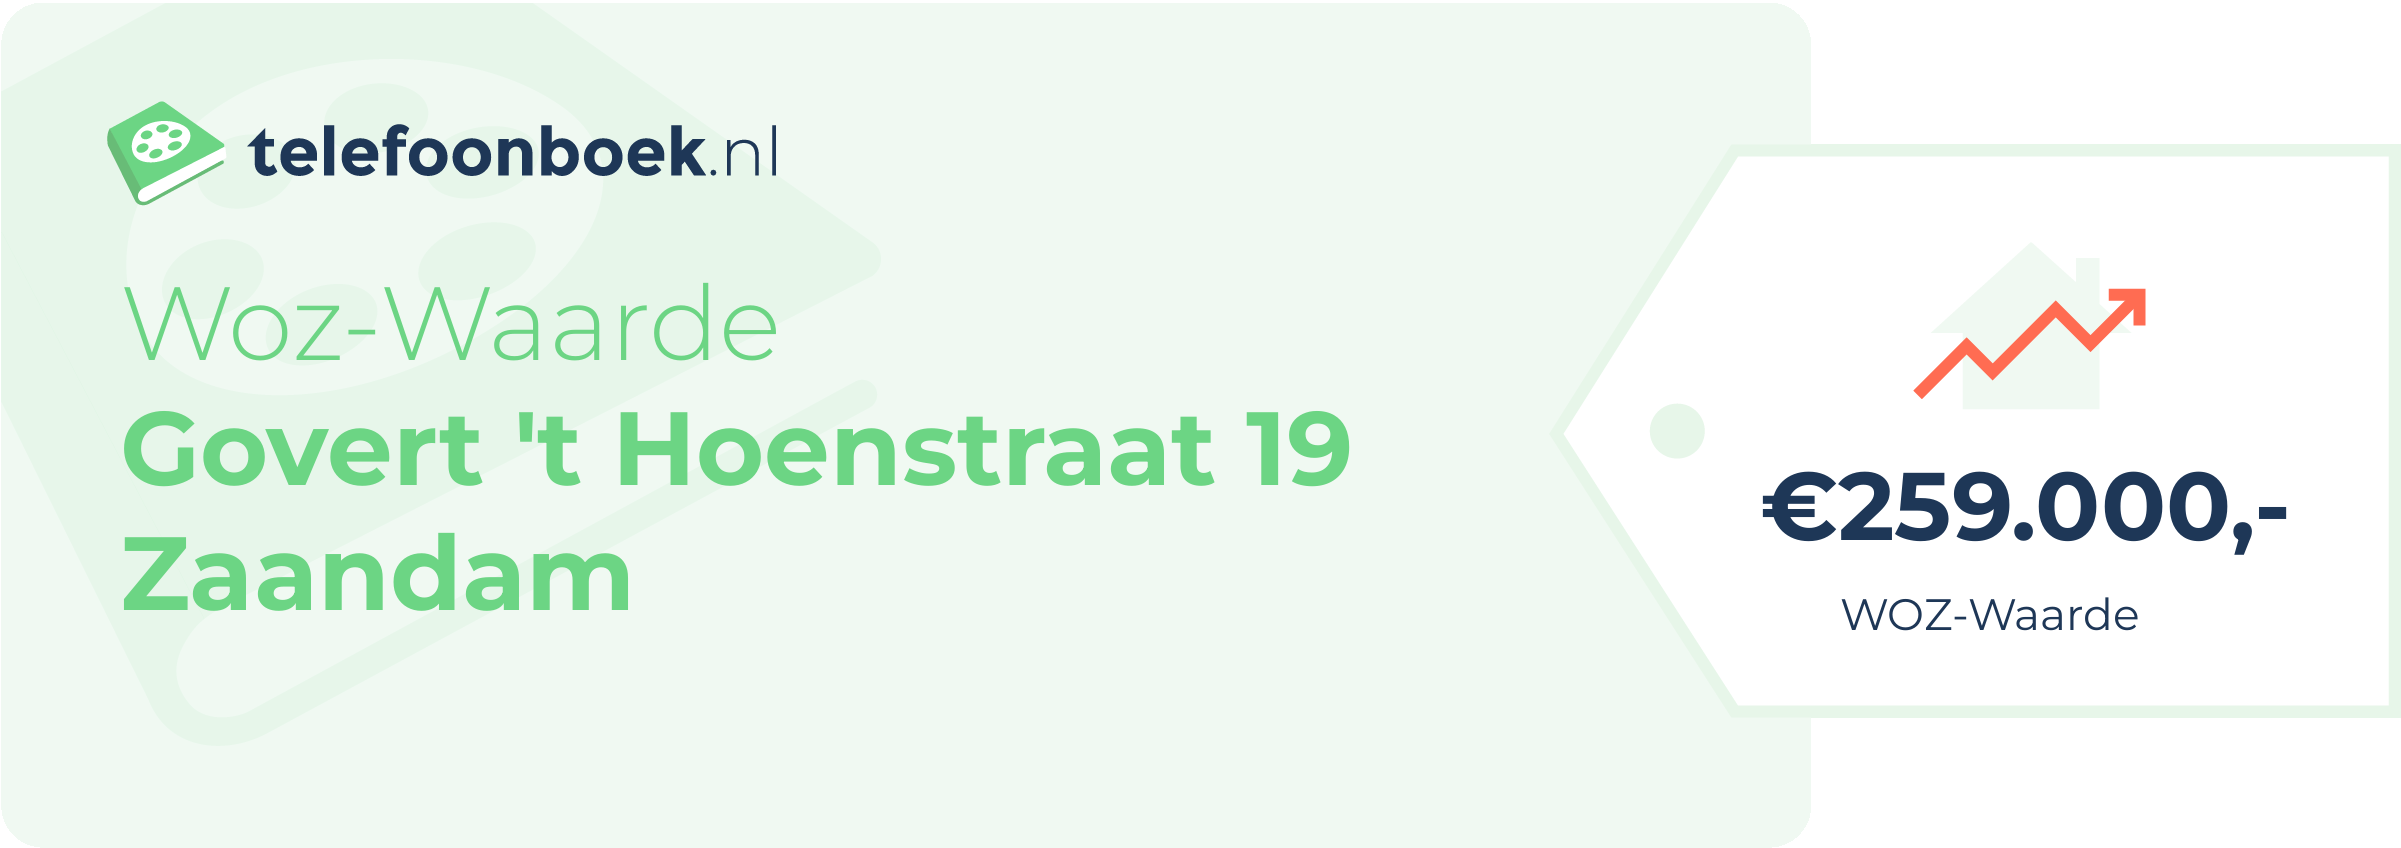 WOZ-waarde Govert 't Hoenstraat 19 Zaandam